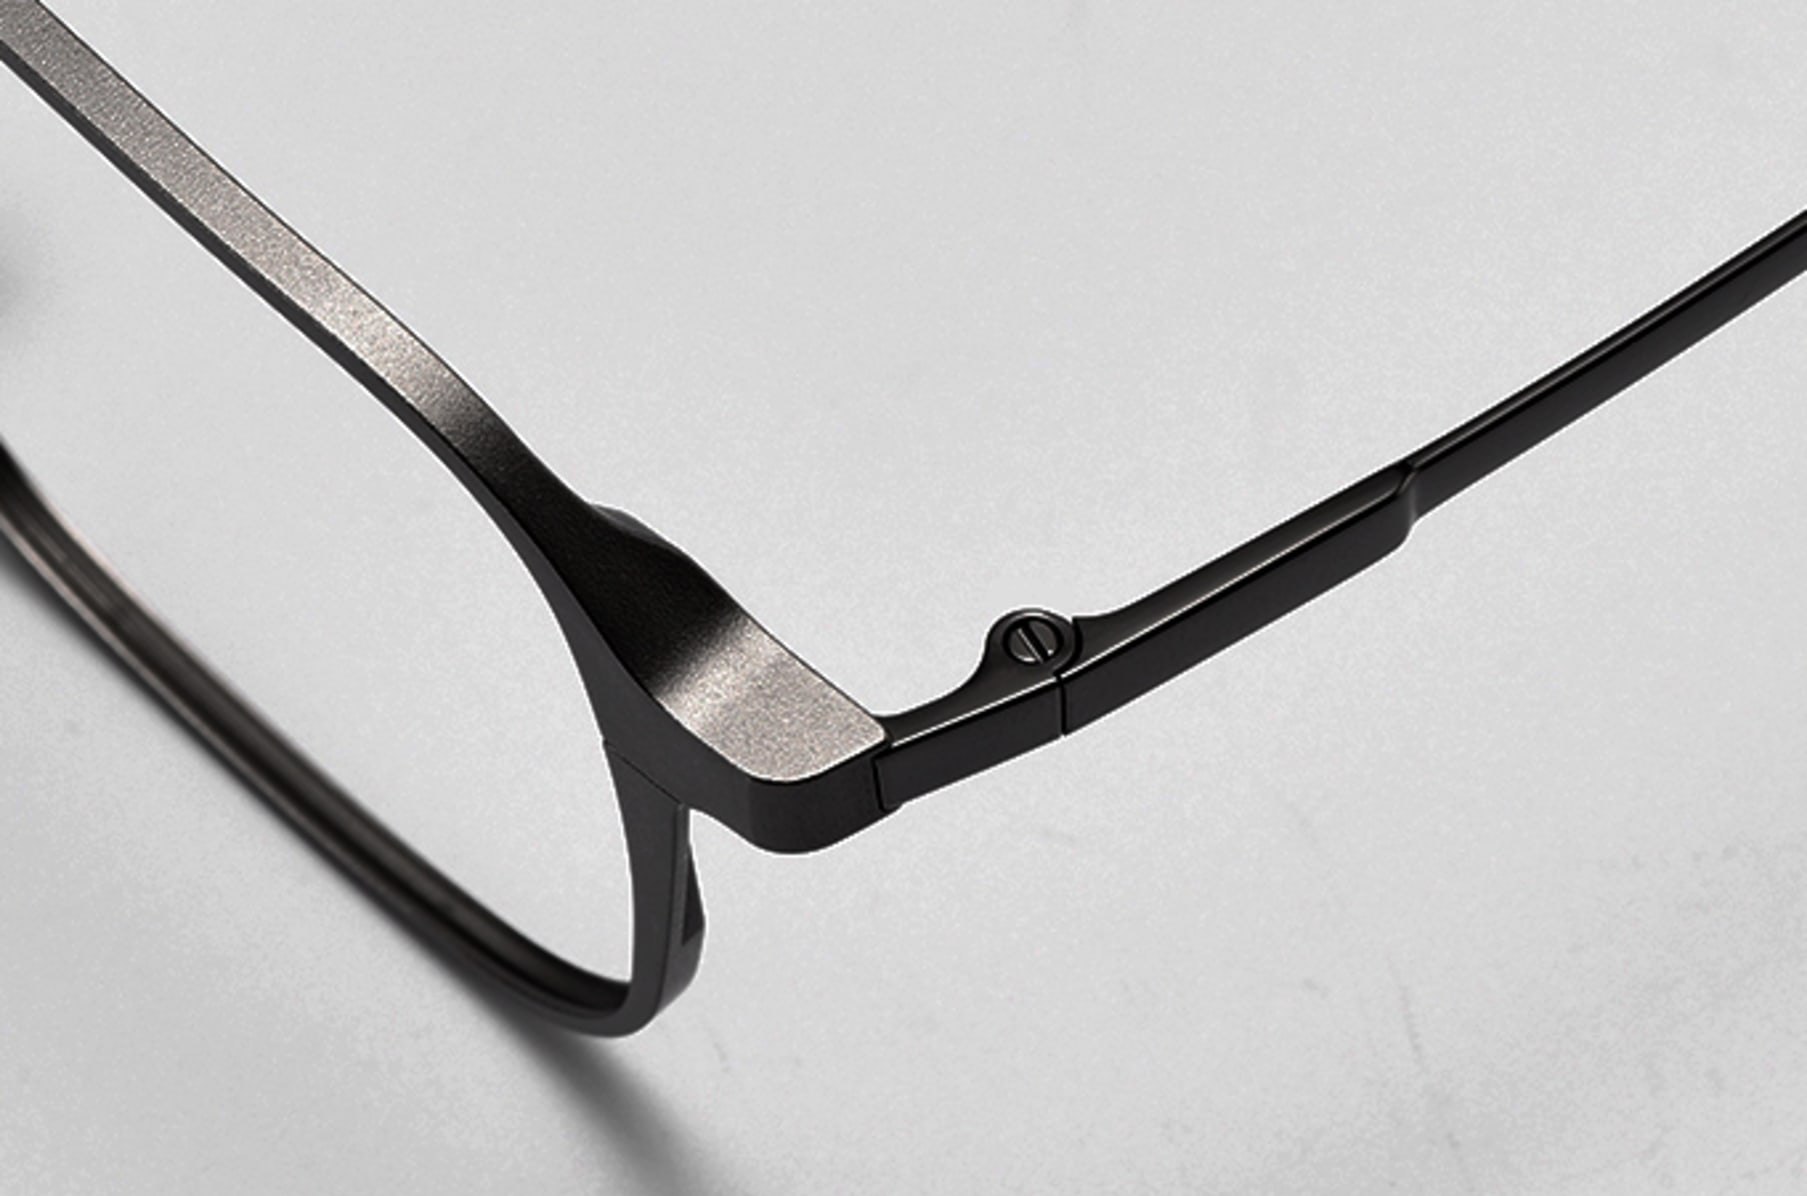 Glasses top rimless 3D model